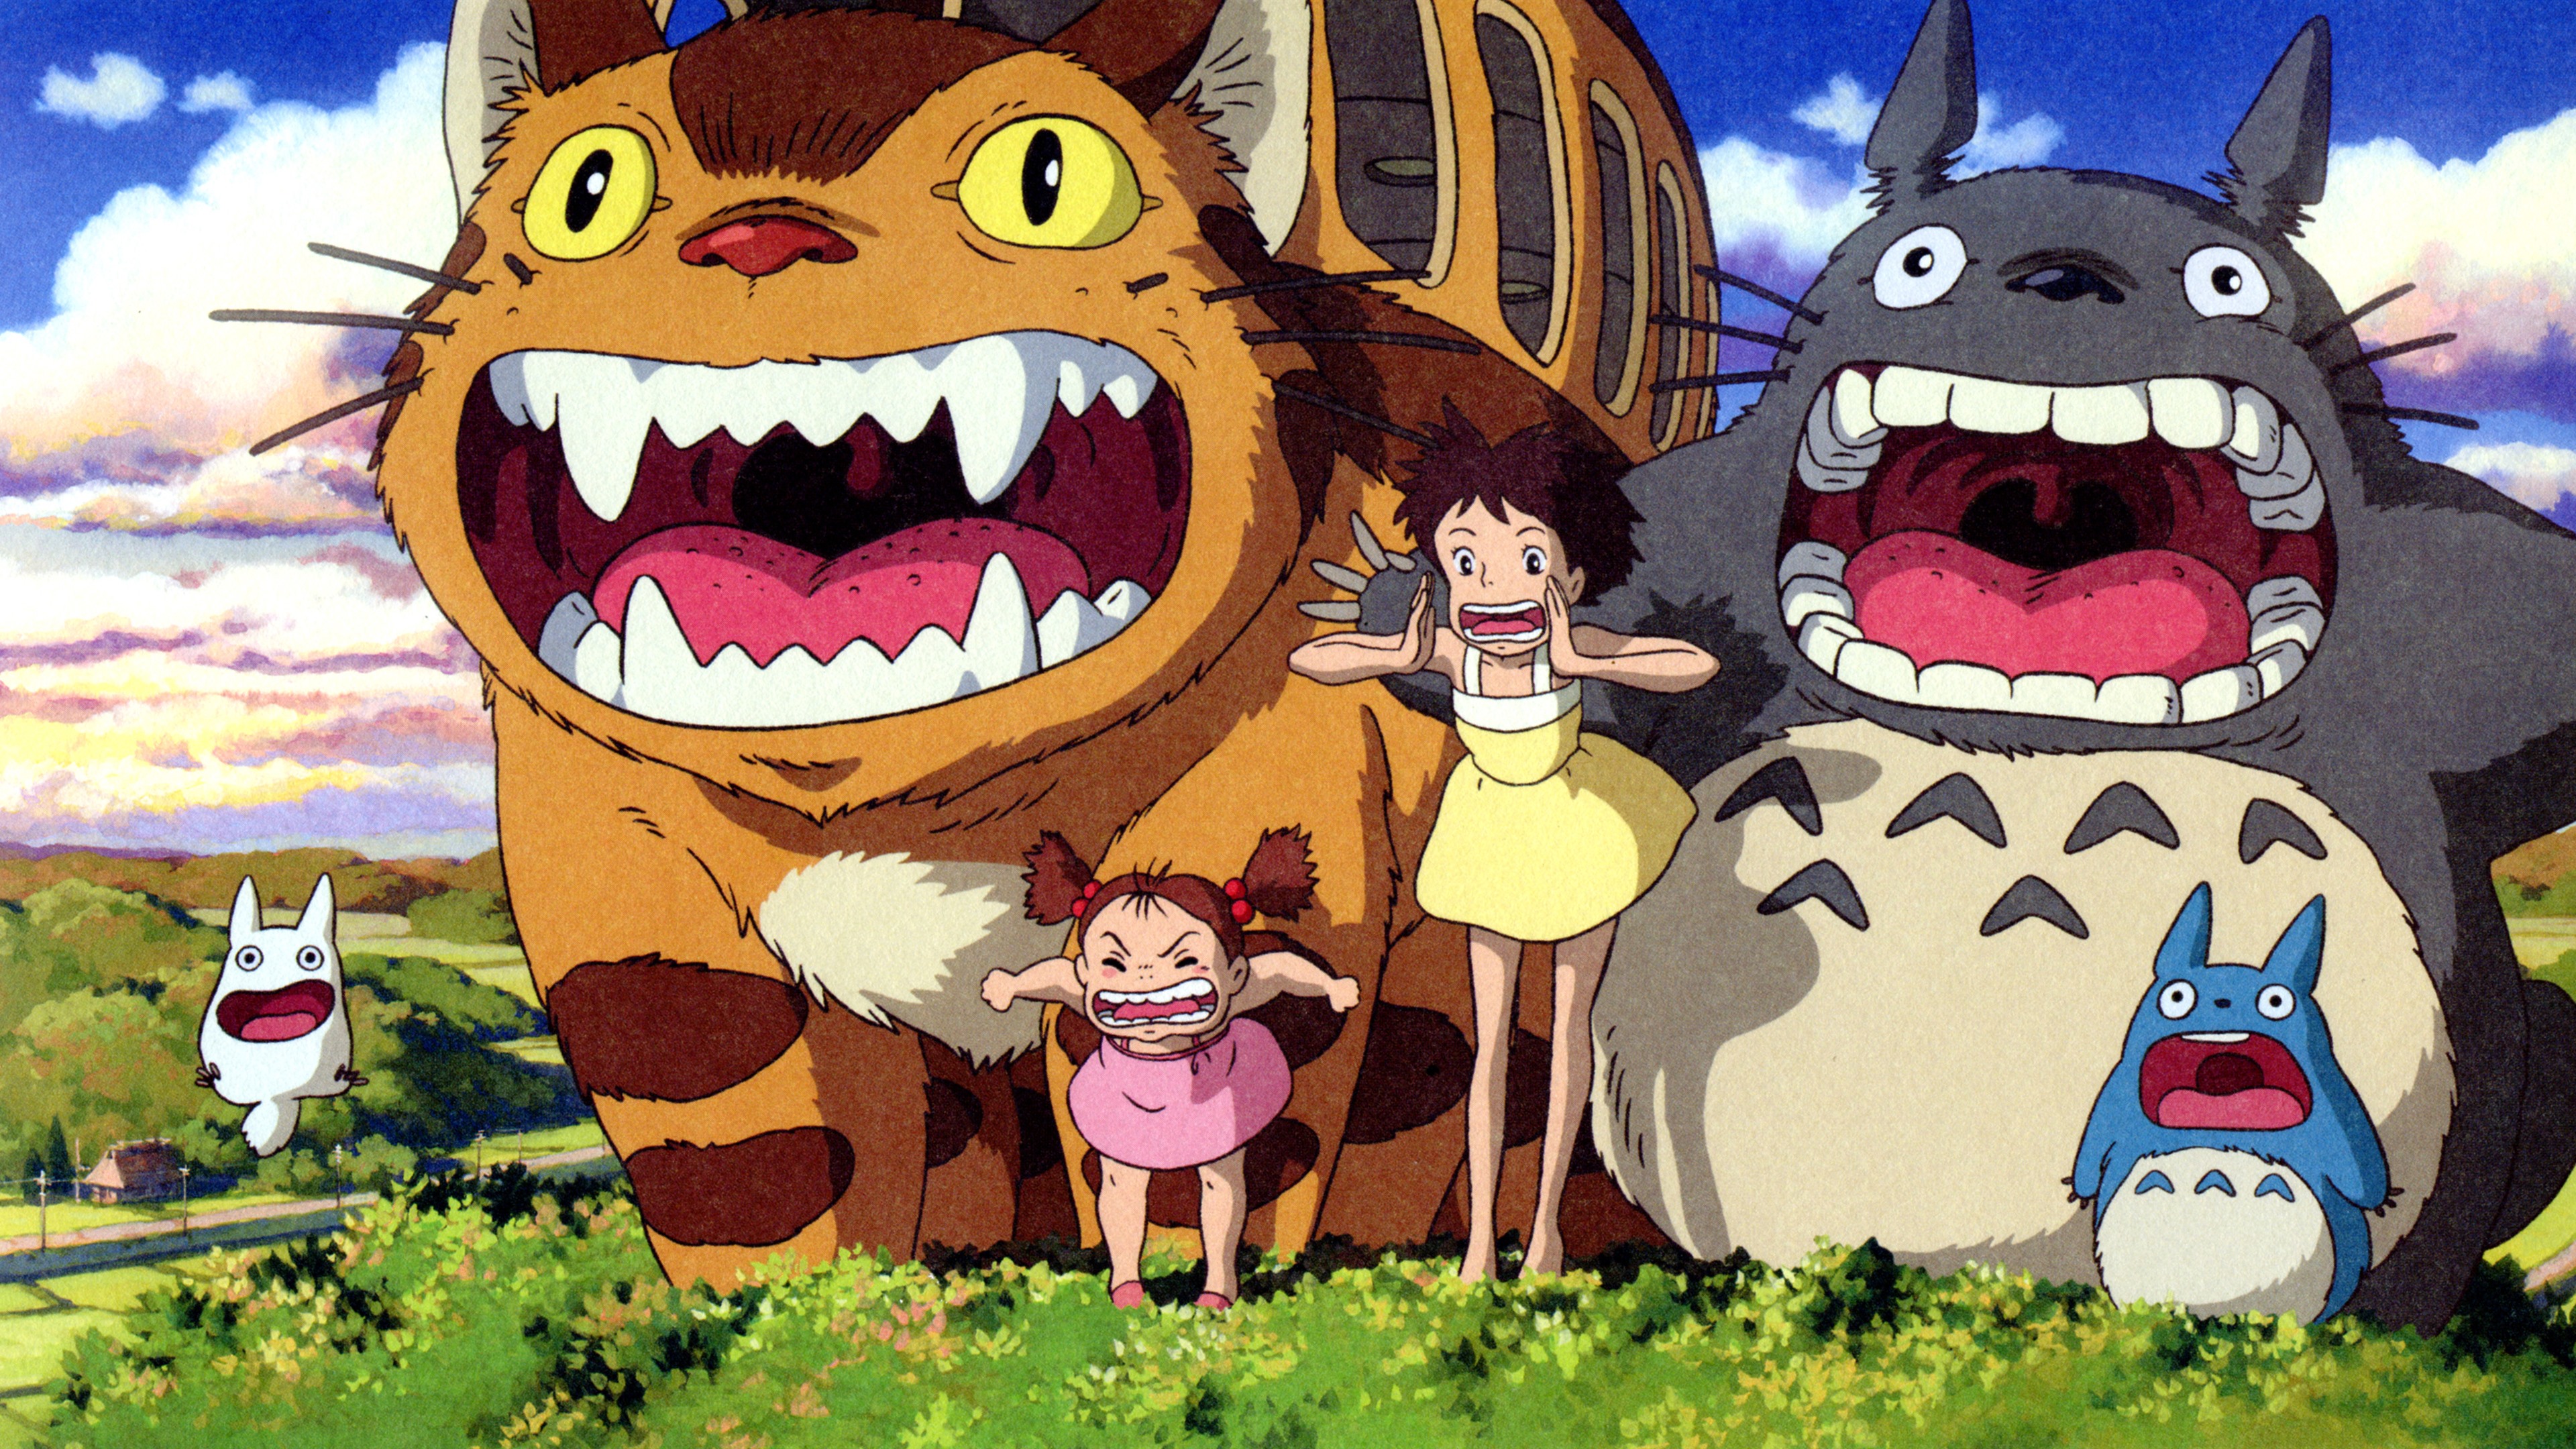 Wallpaper My Neighbor Totoro, Japanese anime 3840x2160 UHD 4K Picture, Image